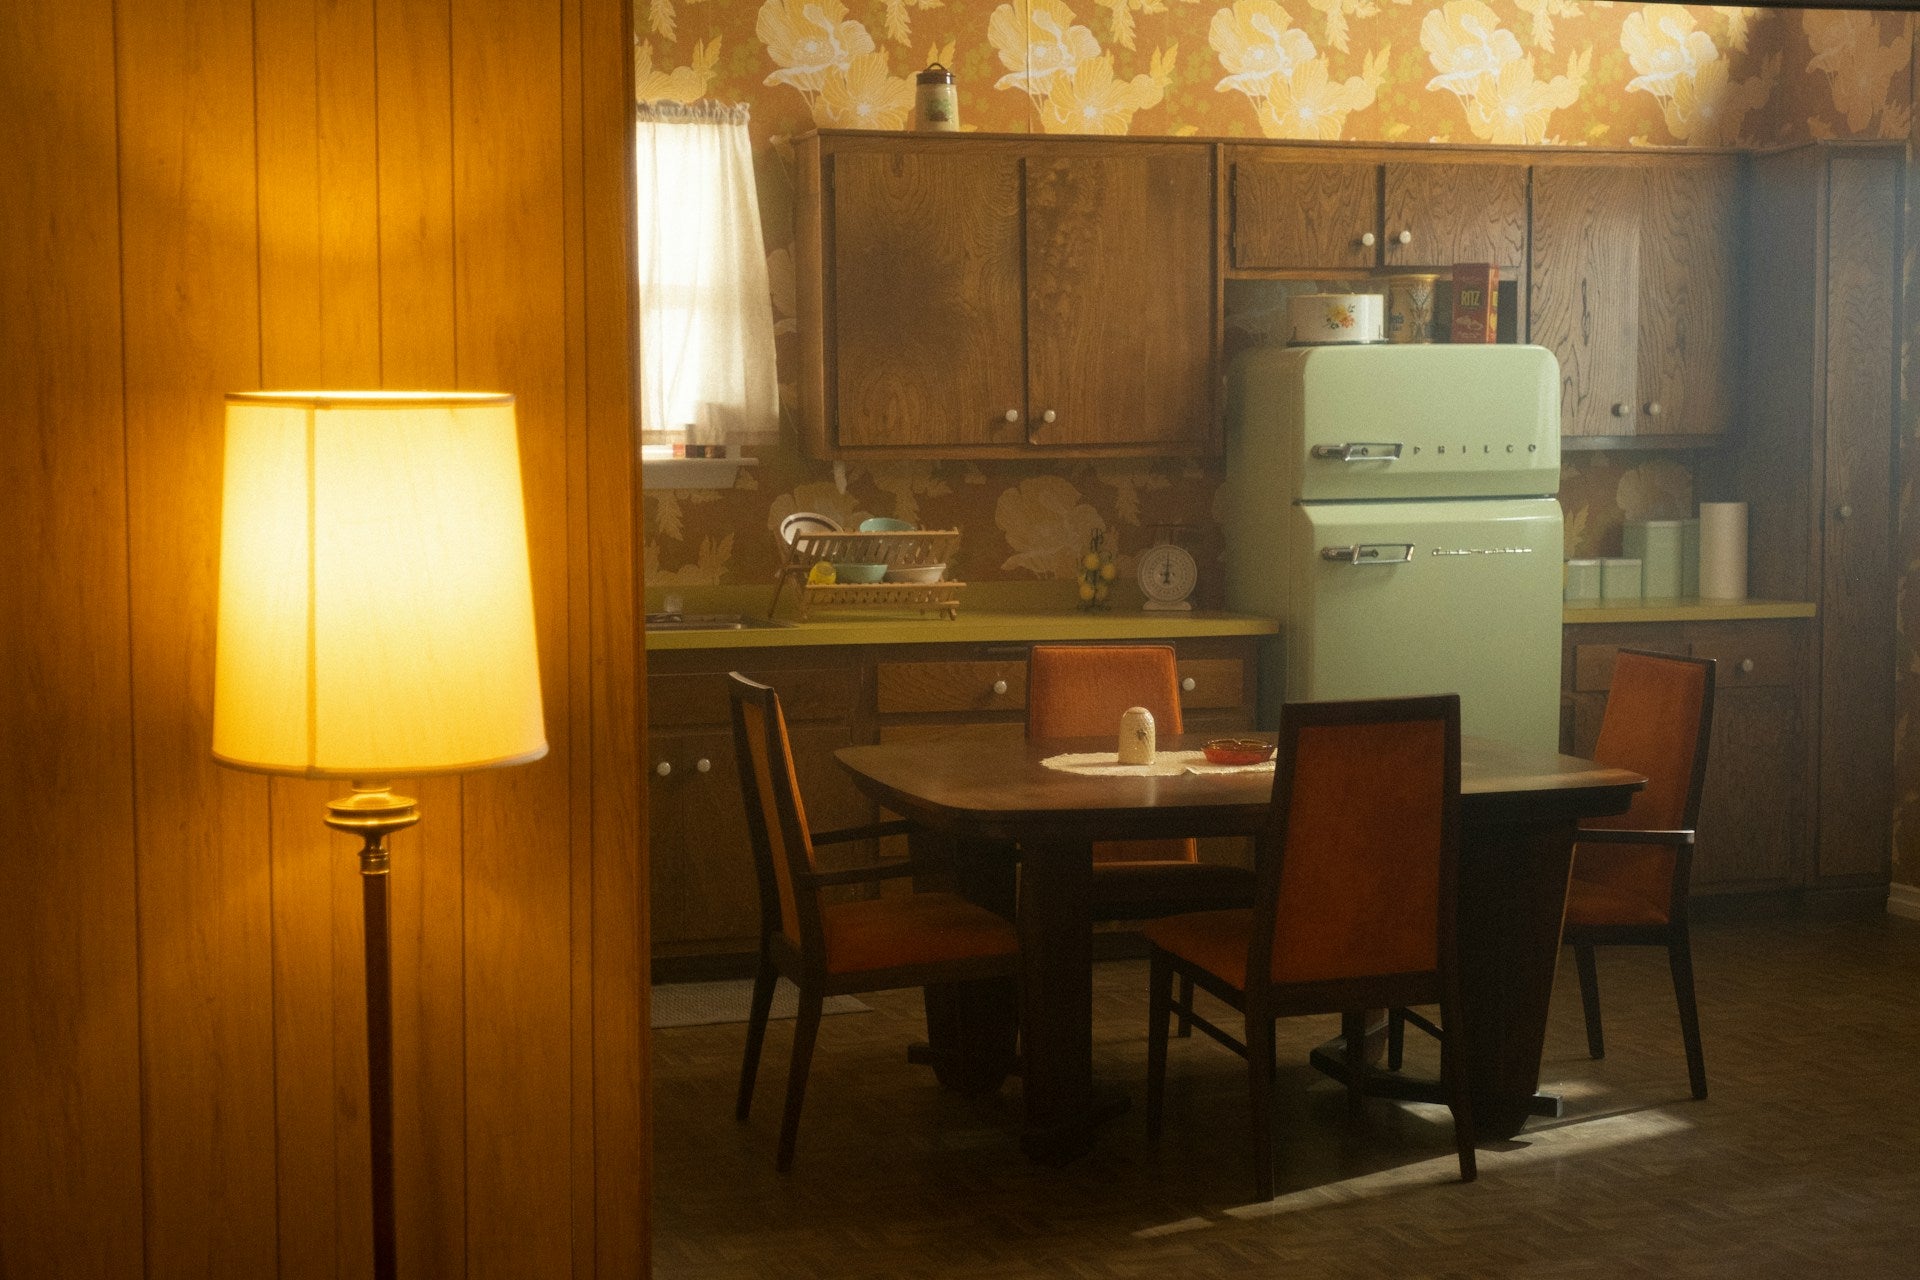 Embrace Nostalgia: Transform Your Home With Vintage Style Refrigerators | Fridge.com